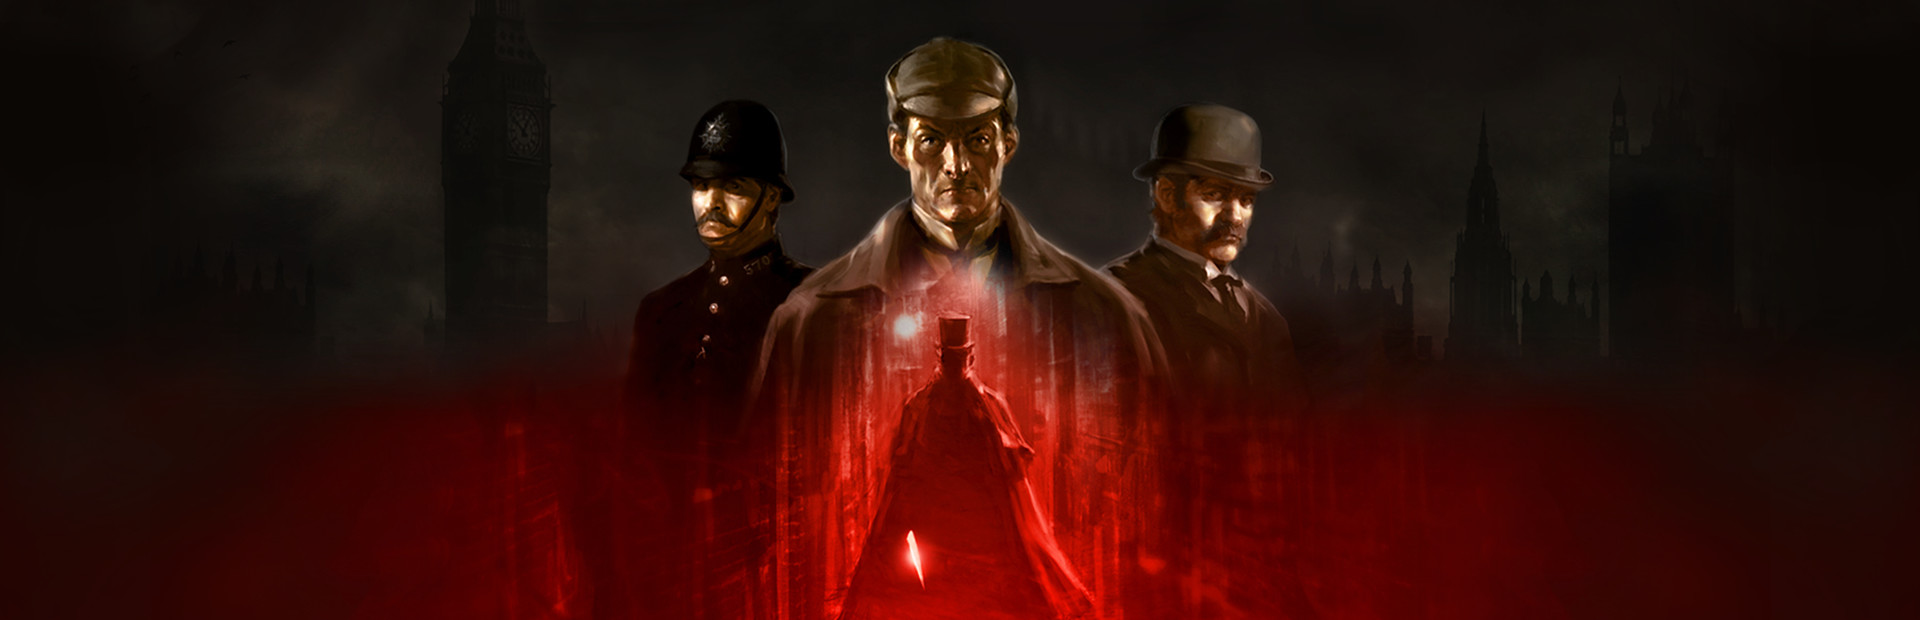 Sherlock Holmes versus Jack the Ripper cover image